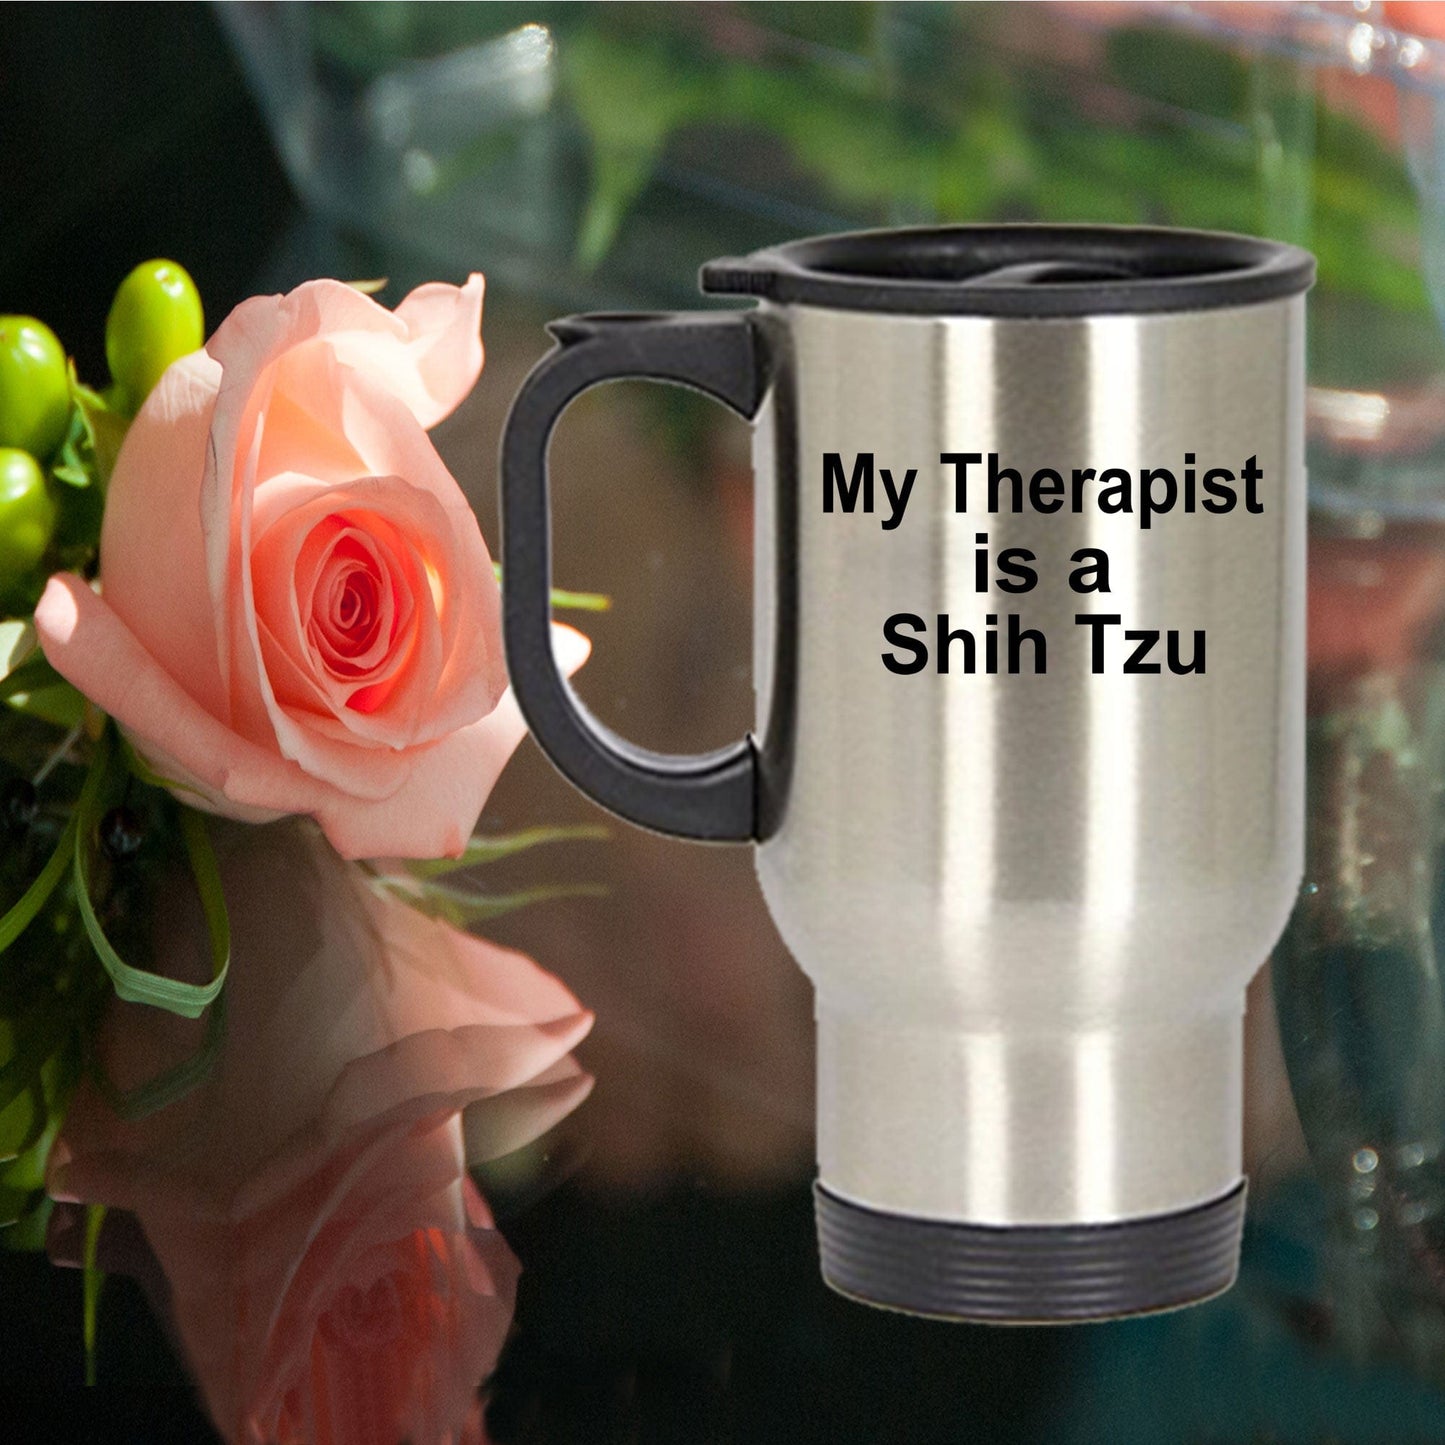 Shih Tzu Dog Therapist Travel  Mug